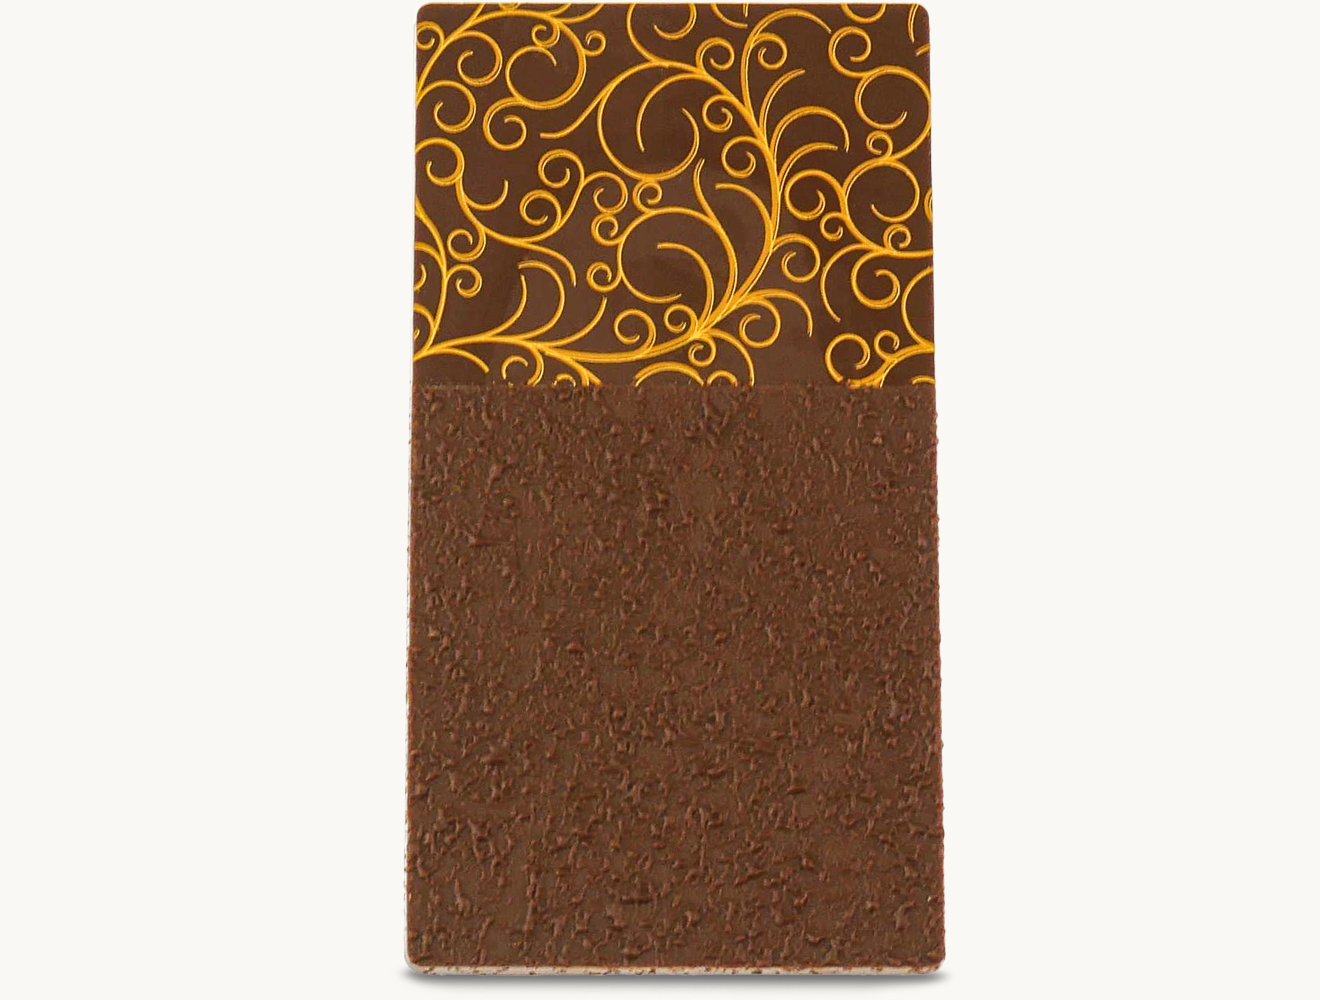 Tafelschokolade Design 43% Kakao Vollmilch